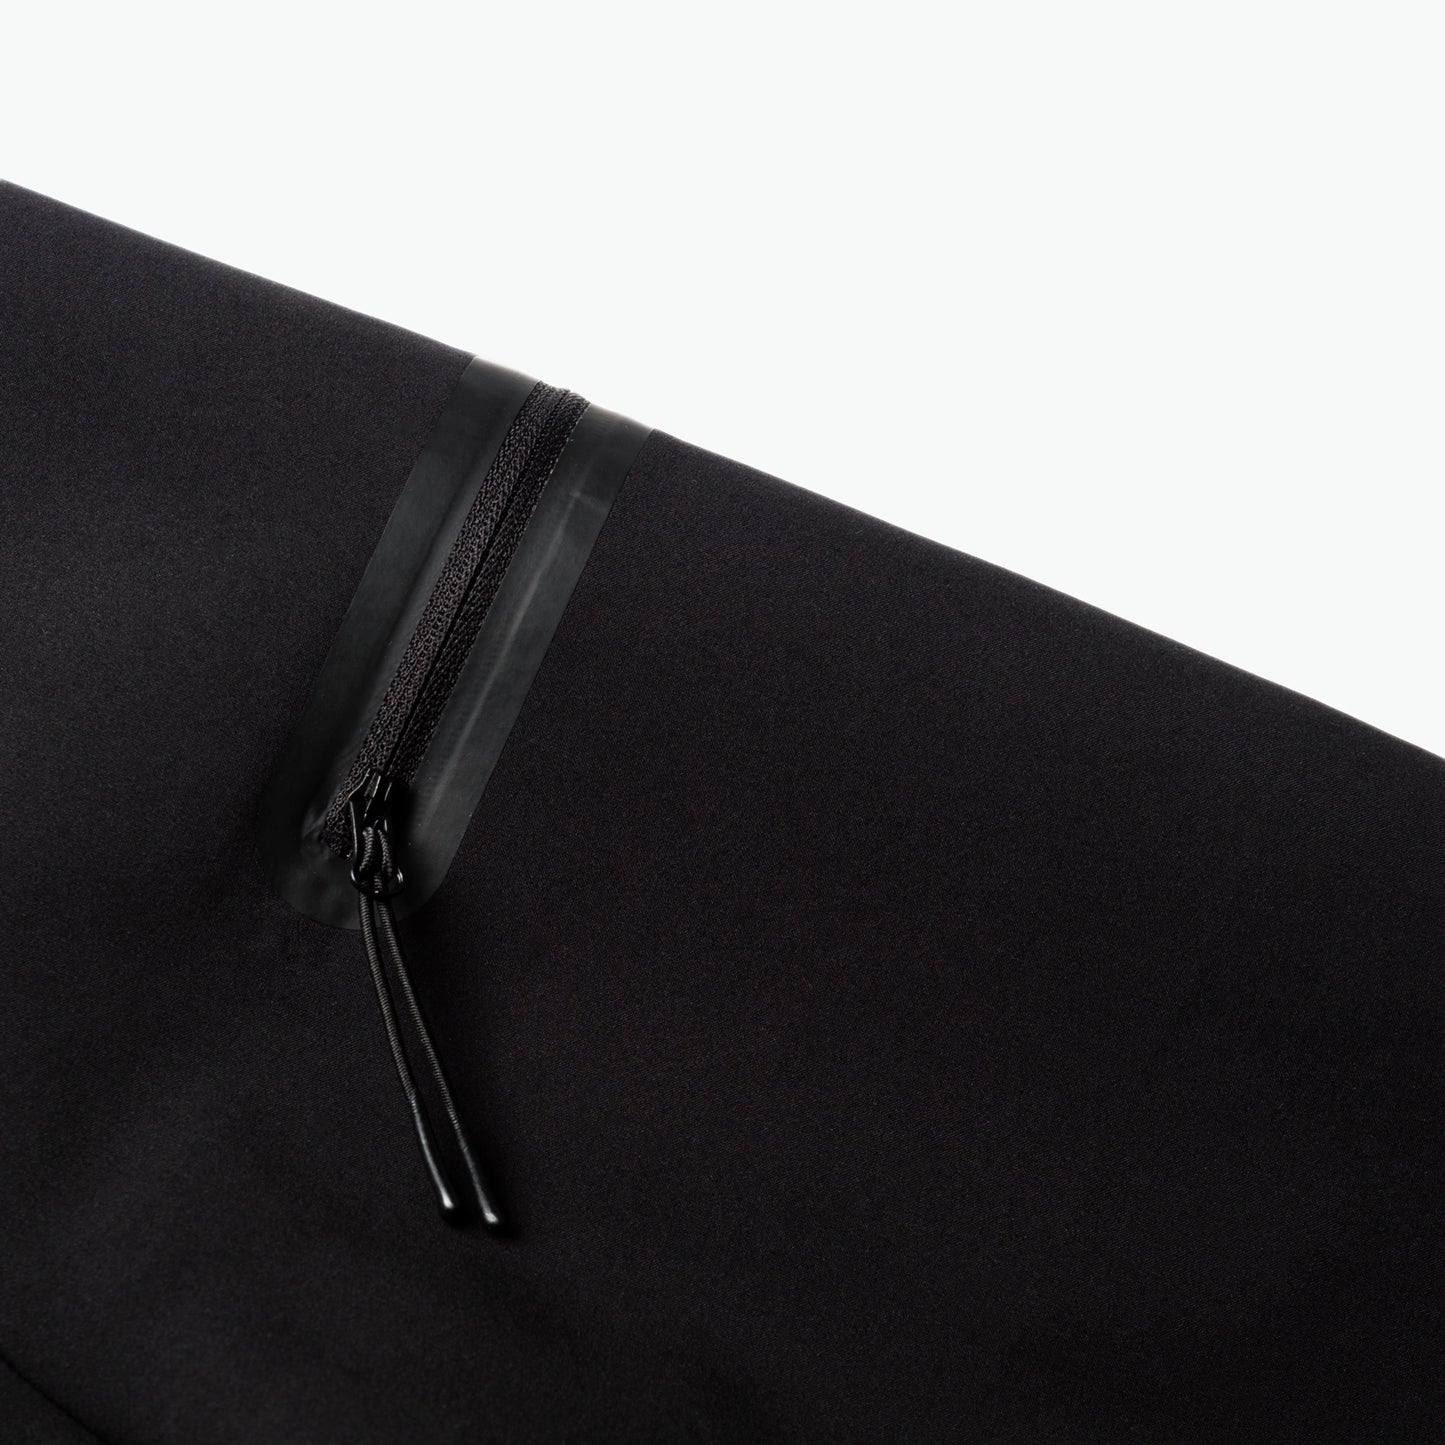 Triton Soft Shell Jacket (Black)